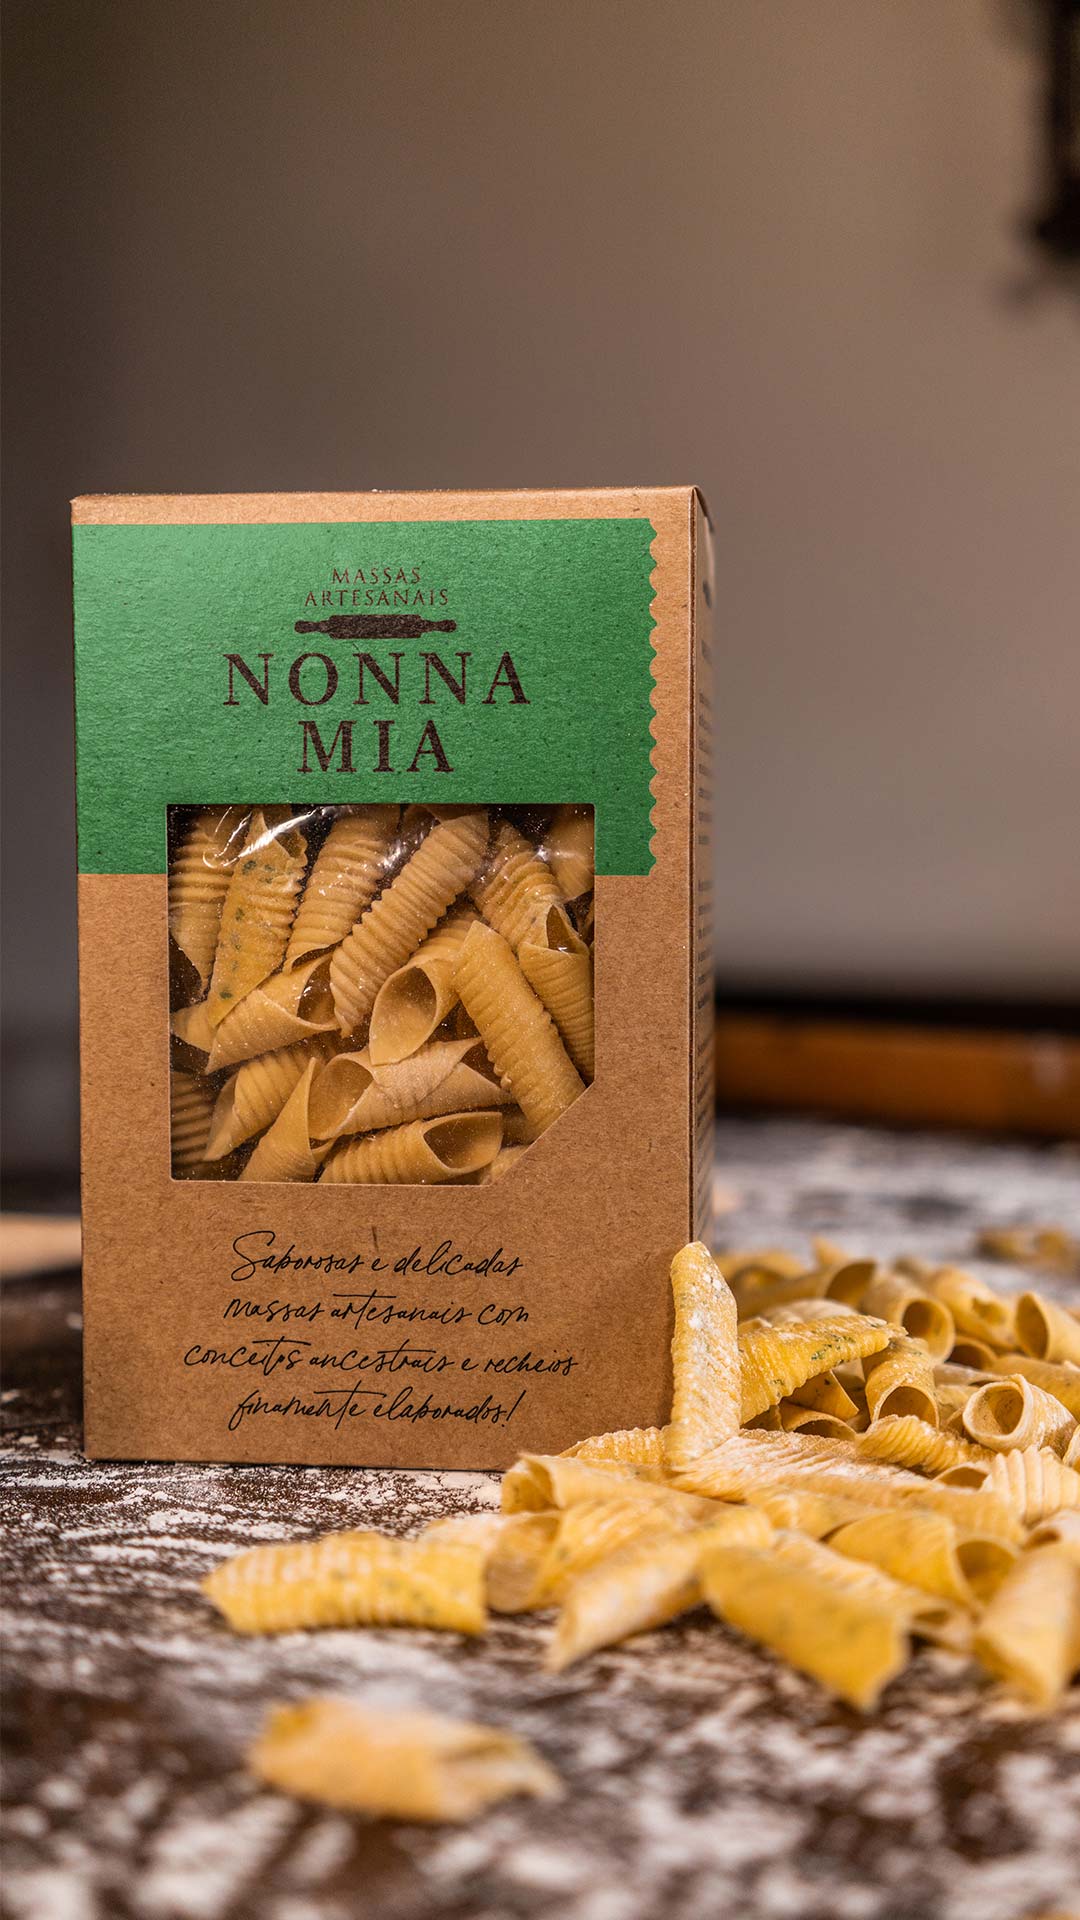 Nonna Mia Packaging - Ave Design